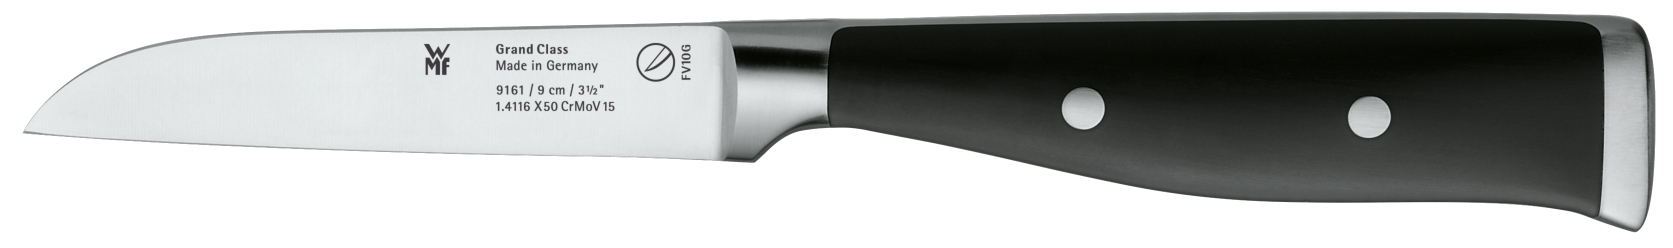 Овощной нож Grand Class 9 см нож для чистки овощей comfort k1298114